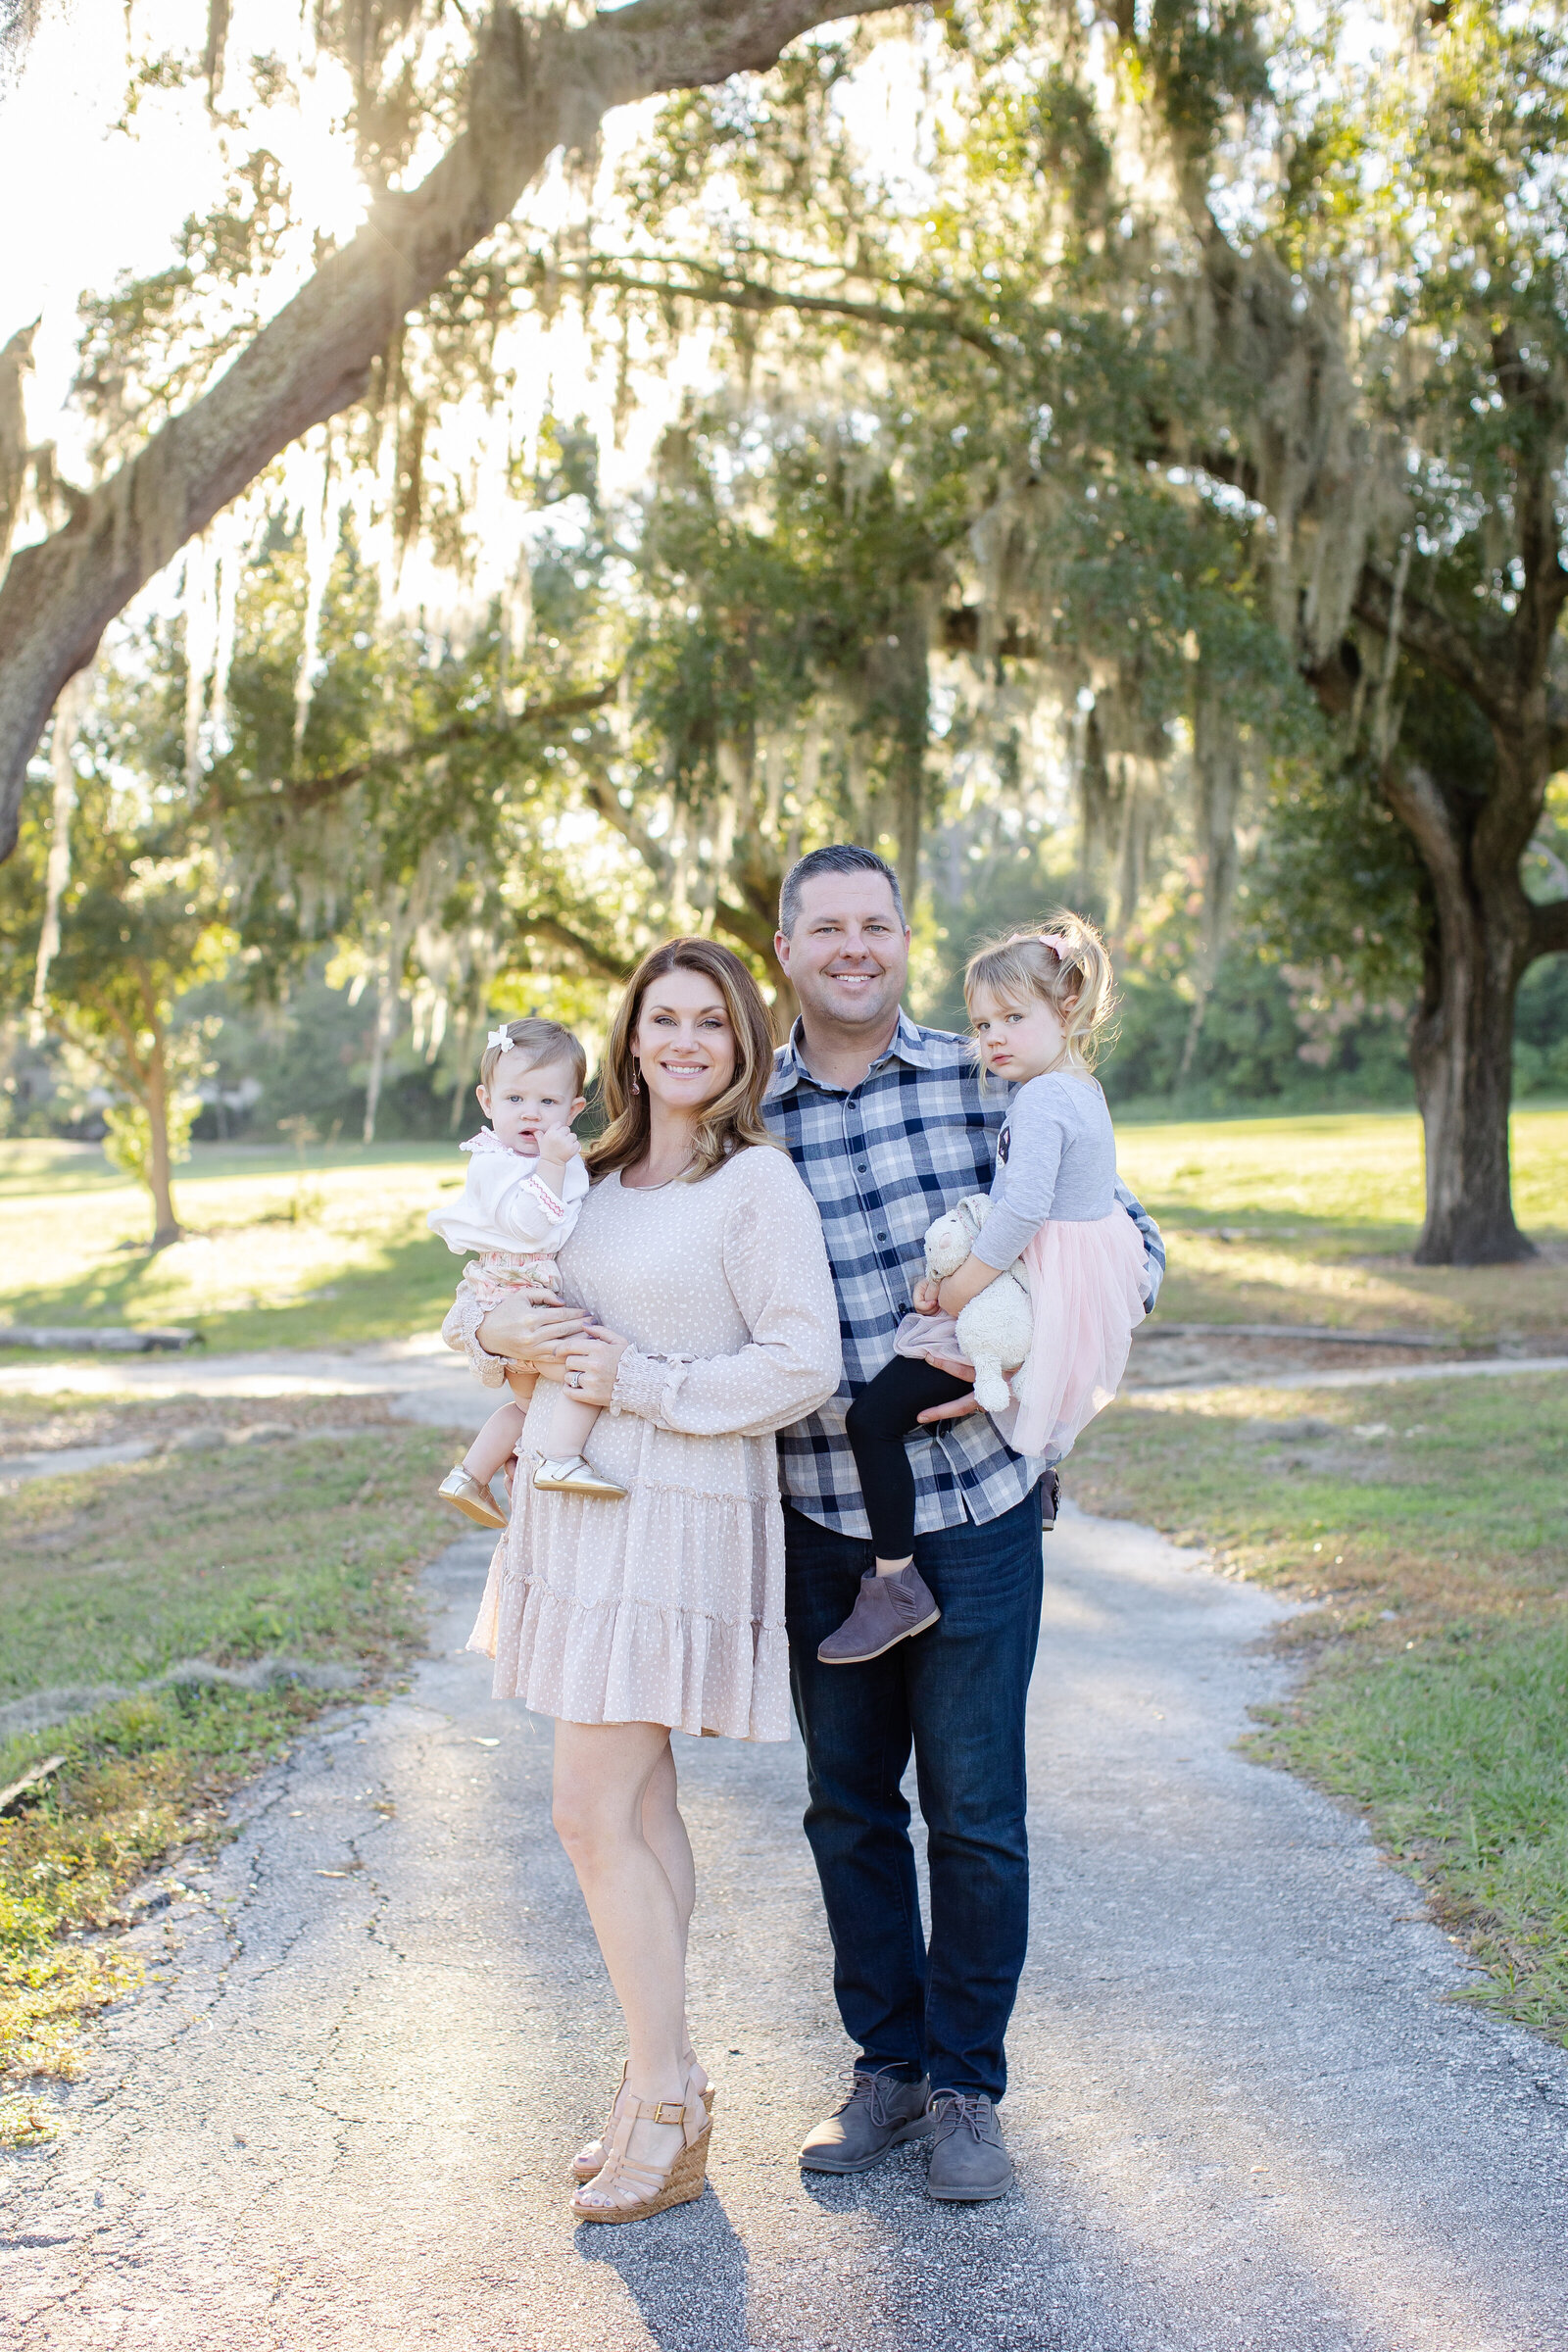 Longwood-Florida family portrait by Riley James.